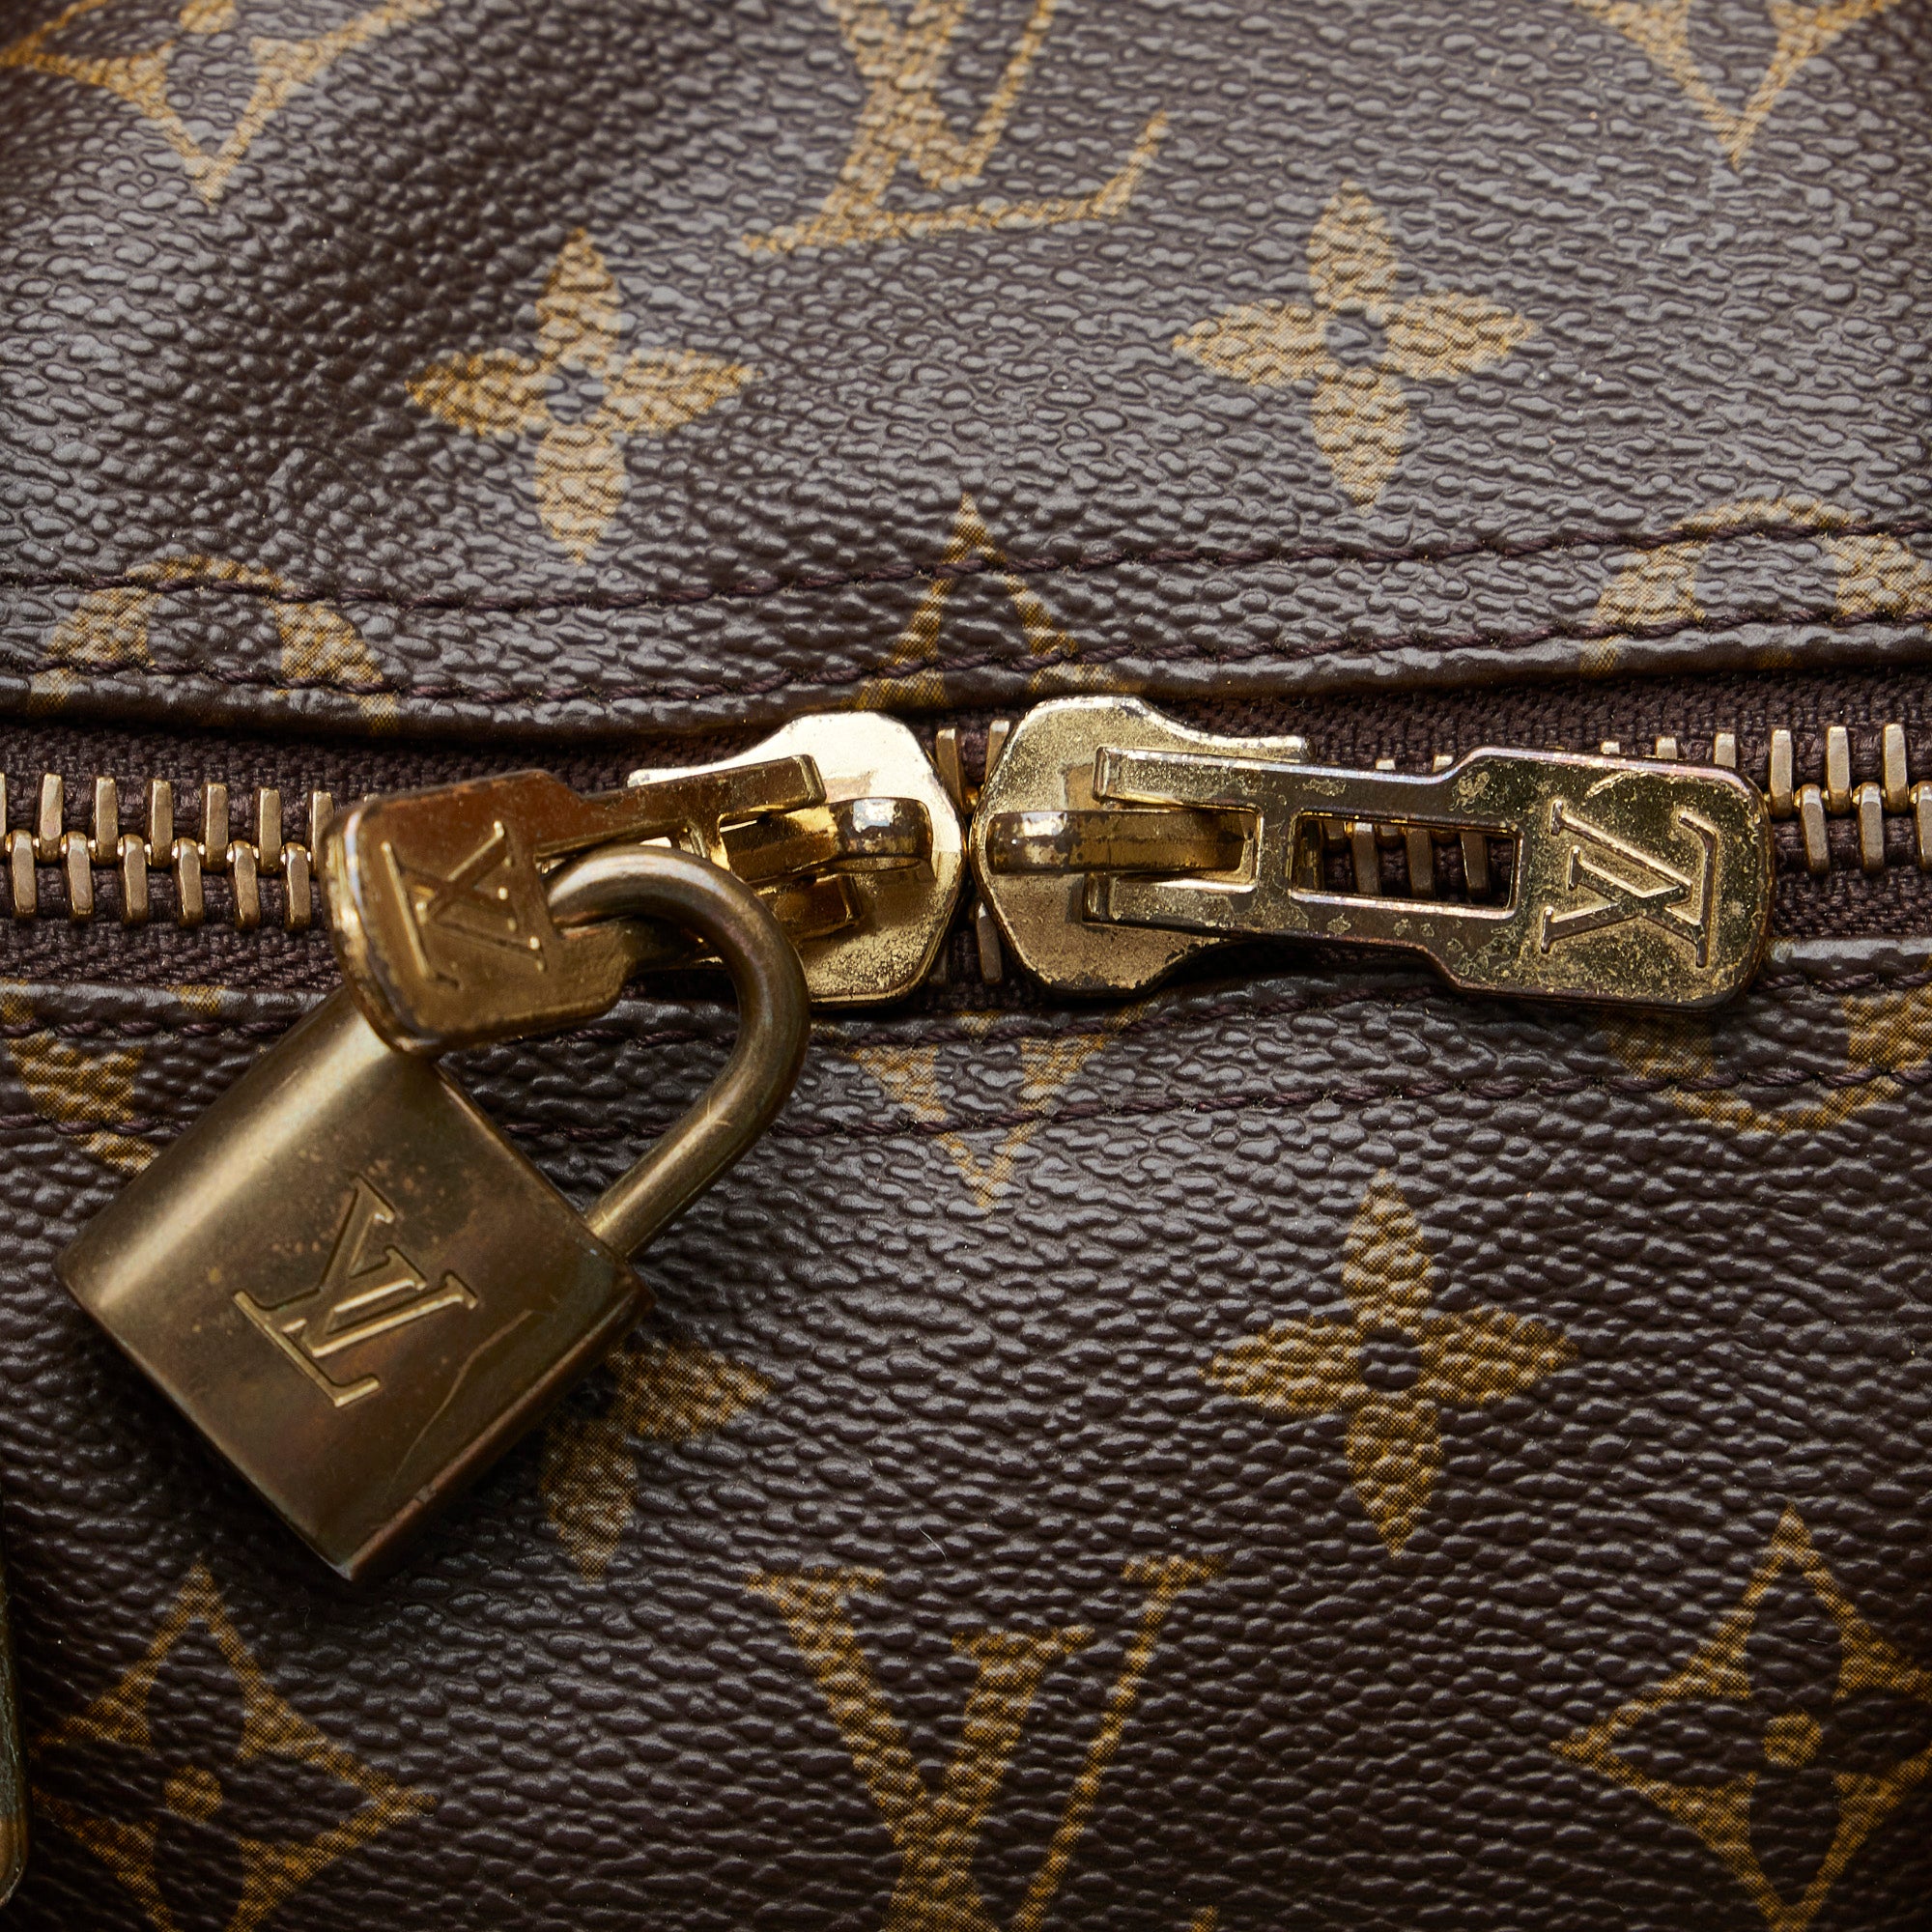 Louis Vuitton Keepall Travel bag 362333